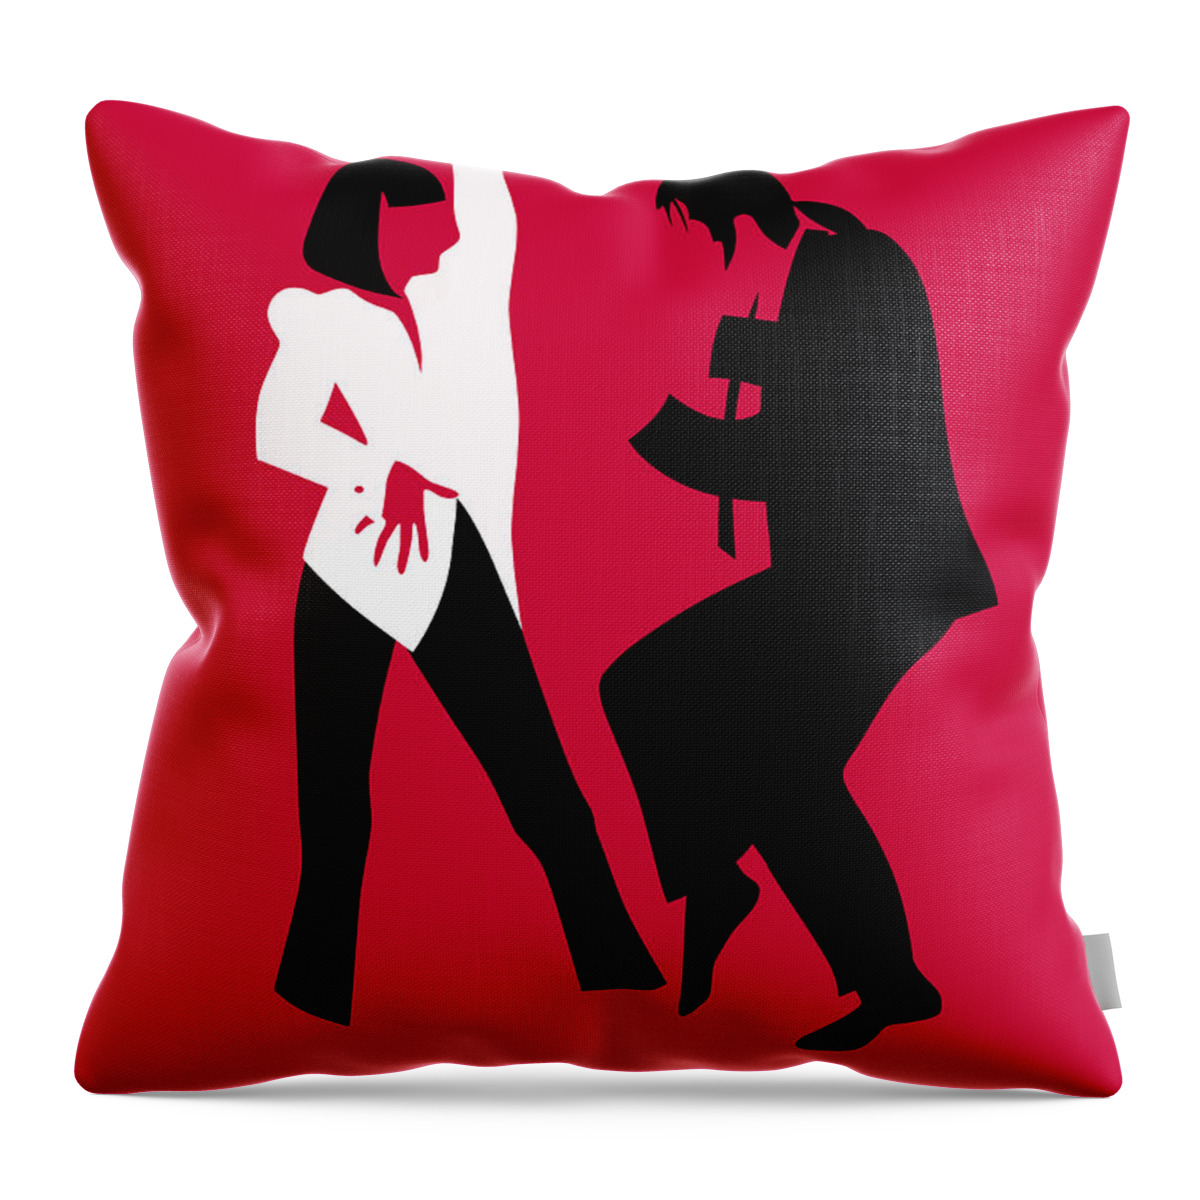 Pulp Fiction Throw Pillow featuring the digital art Dance Good Poster 2 by Naxart Studio